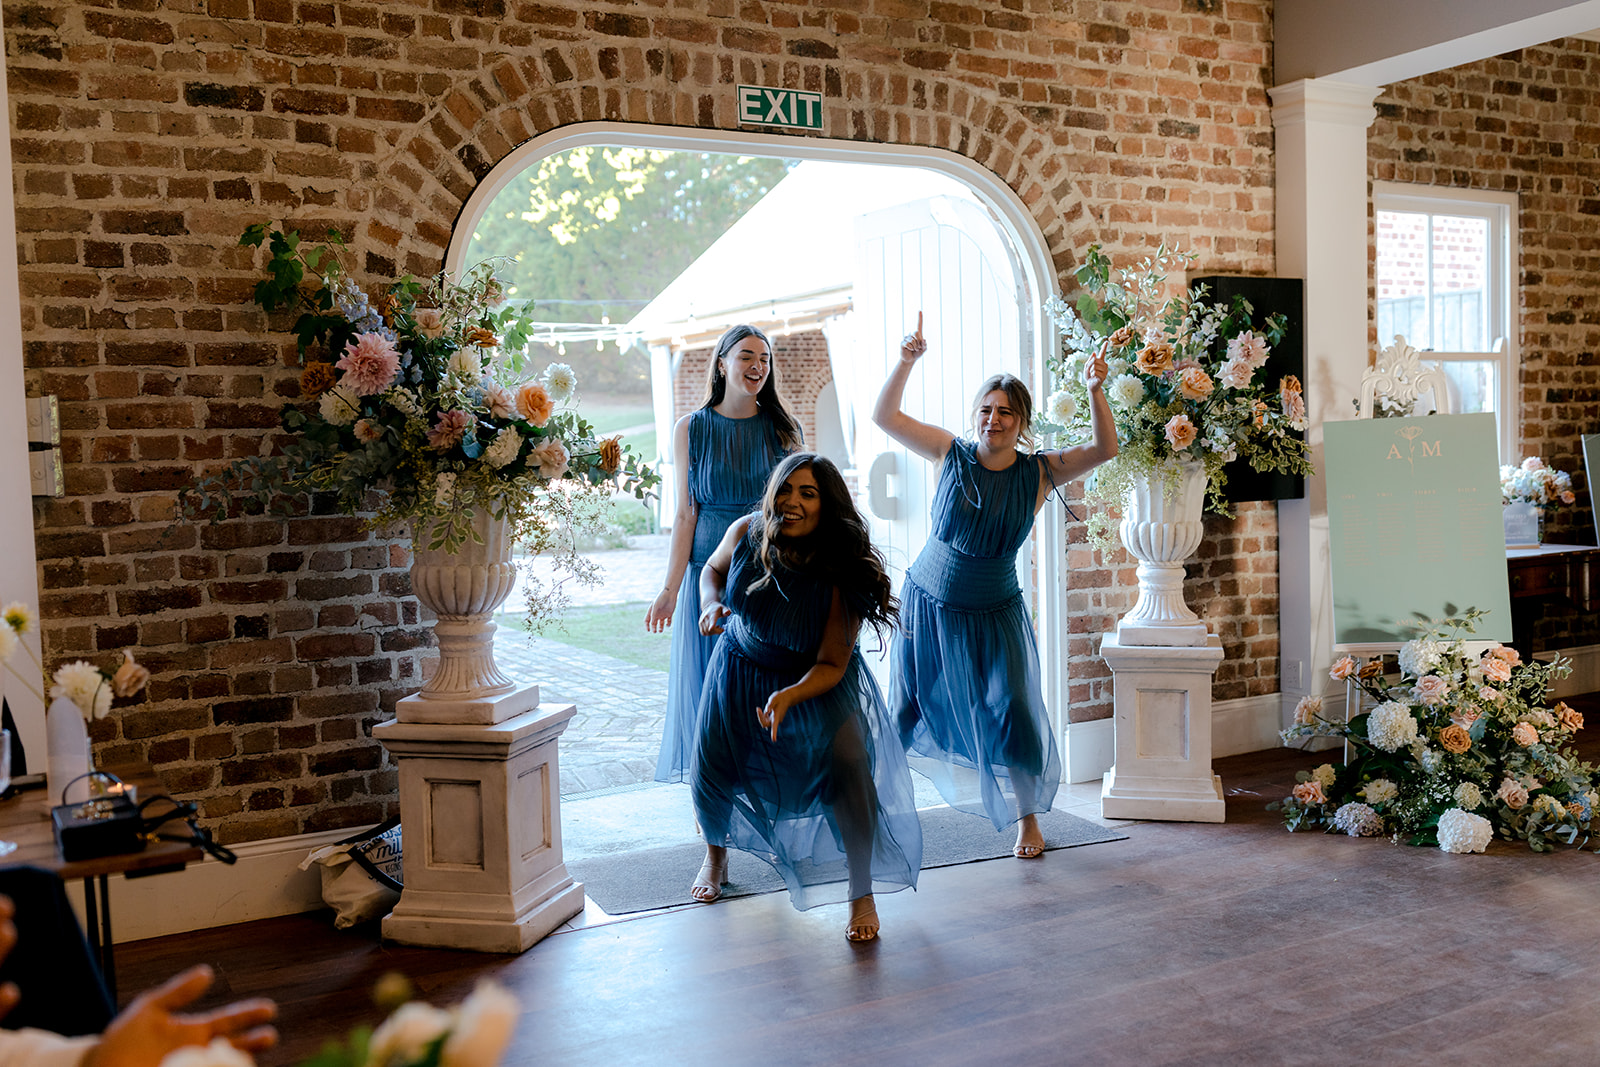 Bridesmaids making a fun entrance at an elegant country wedding reception.